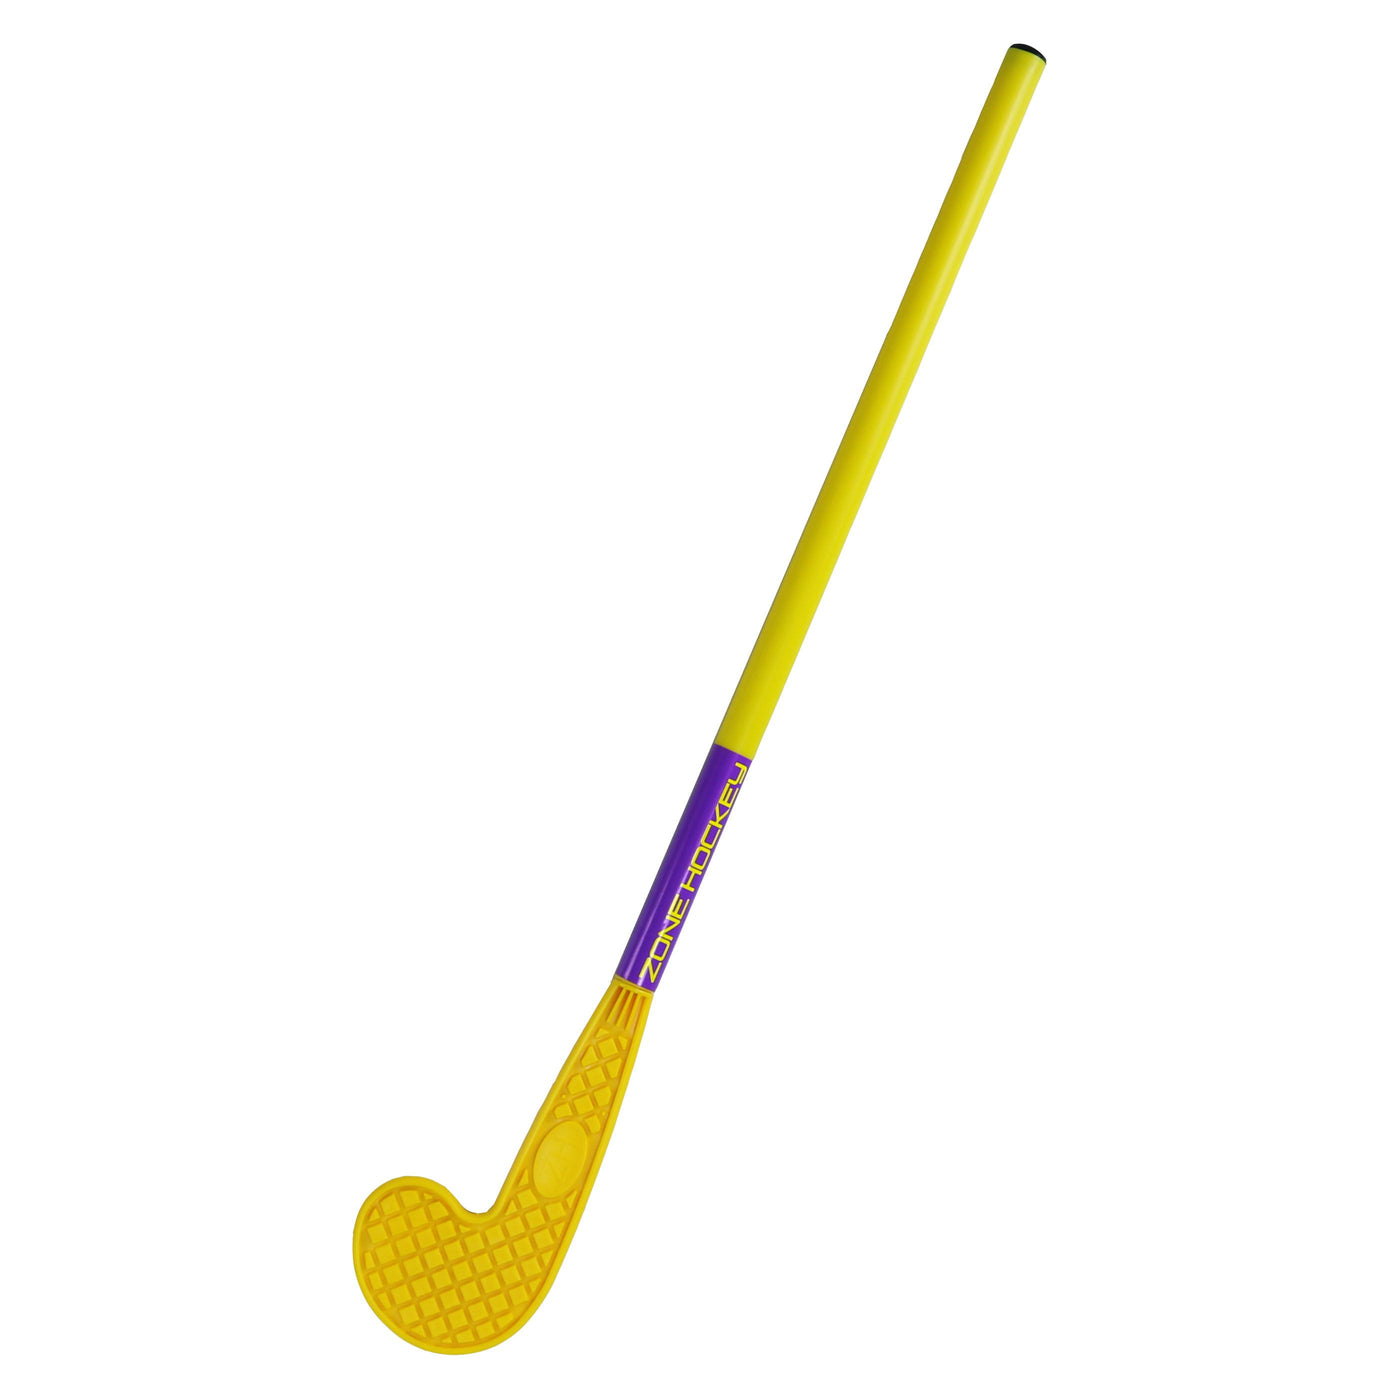 Eurohoc Zone Hockey Stick